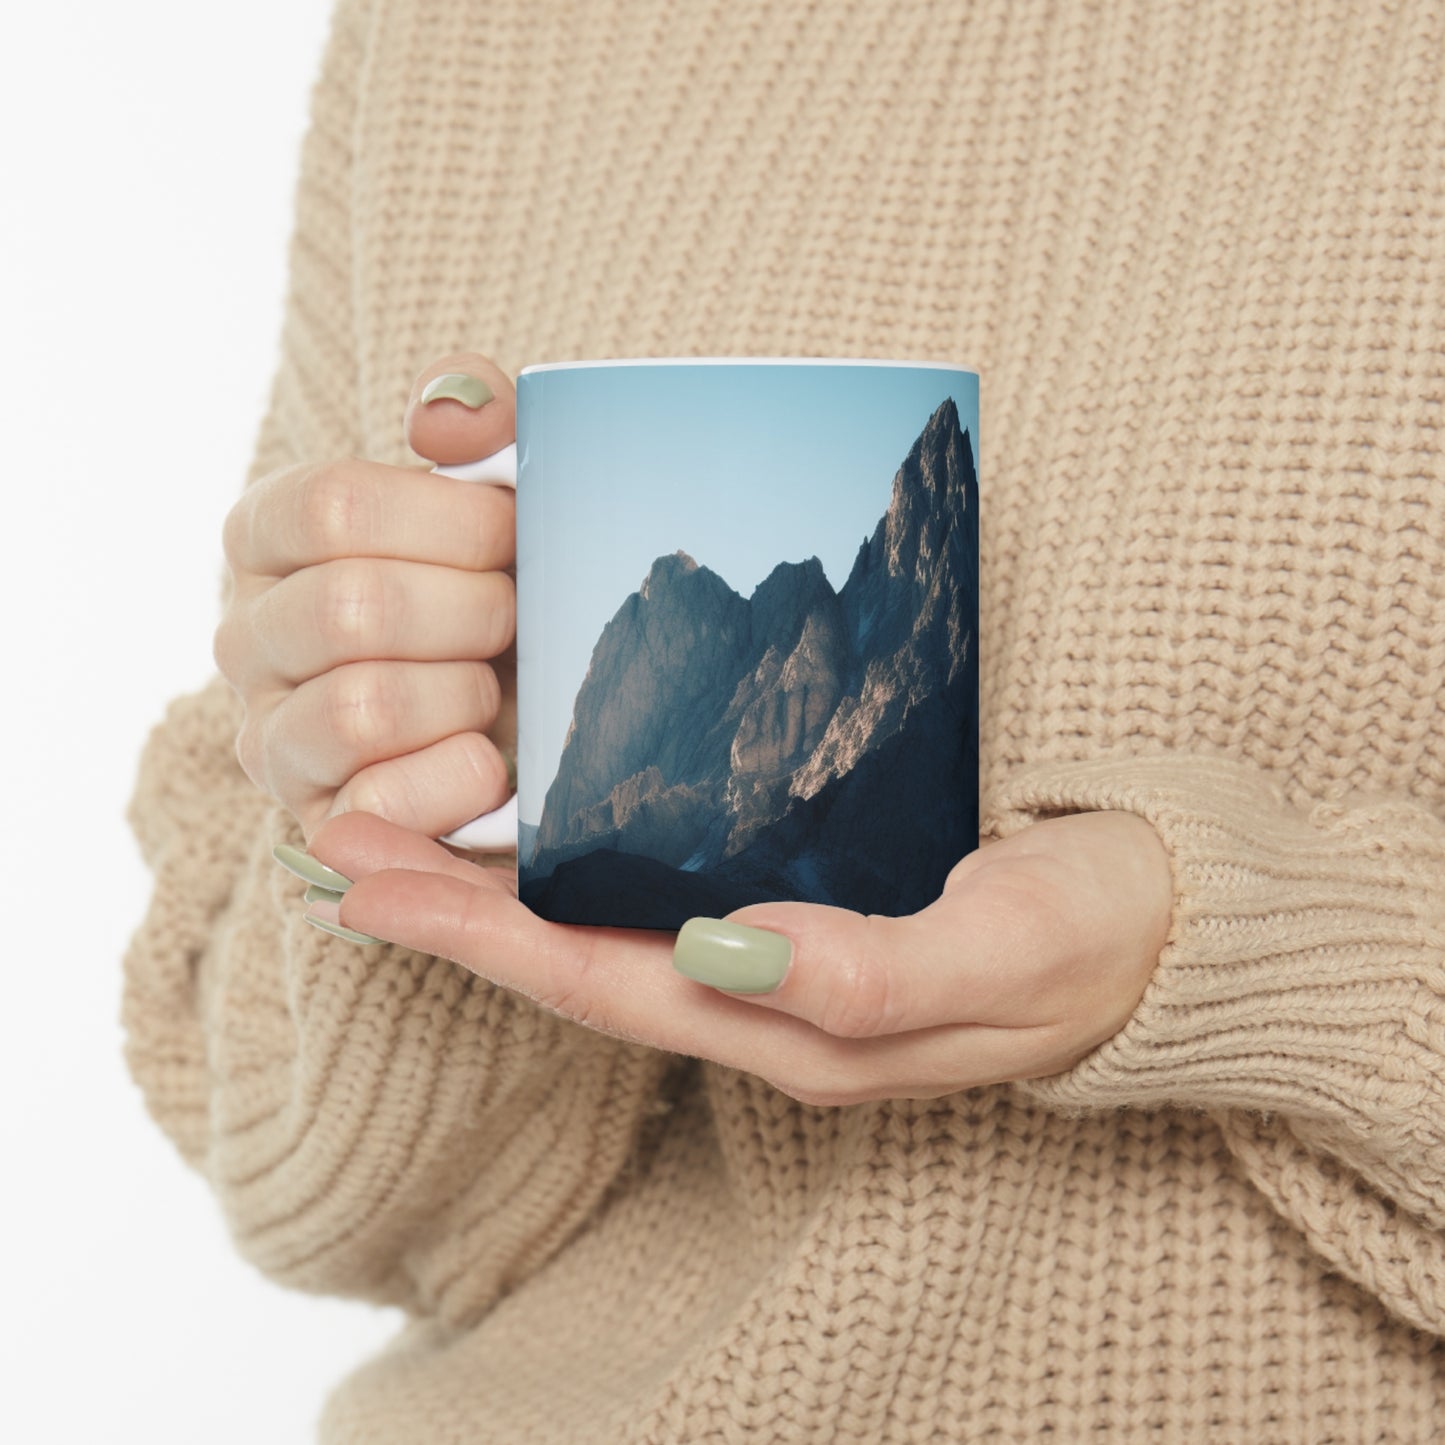 Beautiful Mountains Mug Design.Unique Gift for Her/Him.Customized Mug Design.